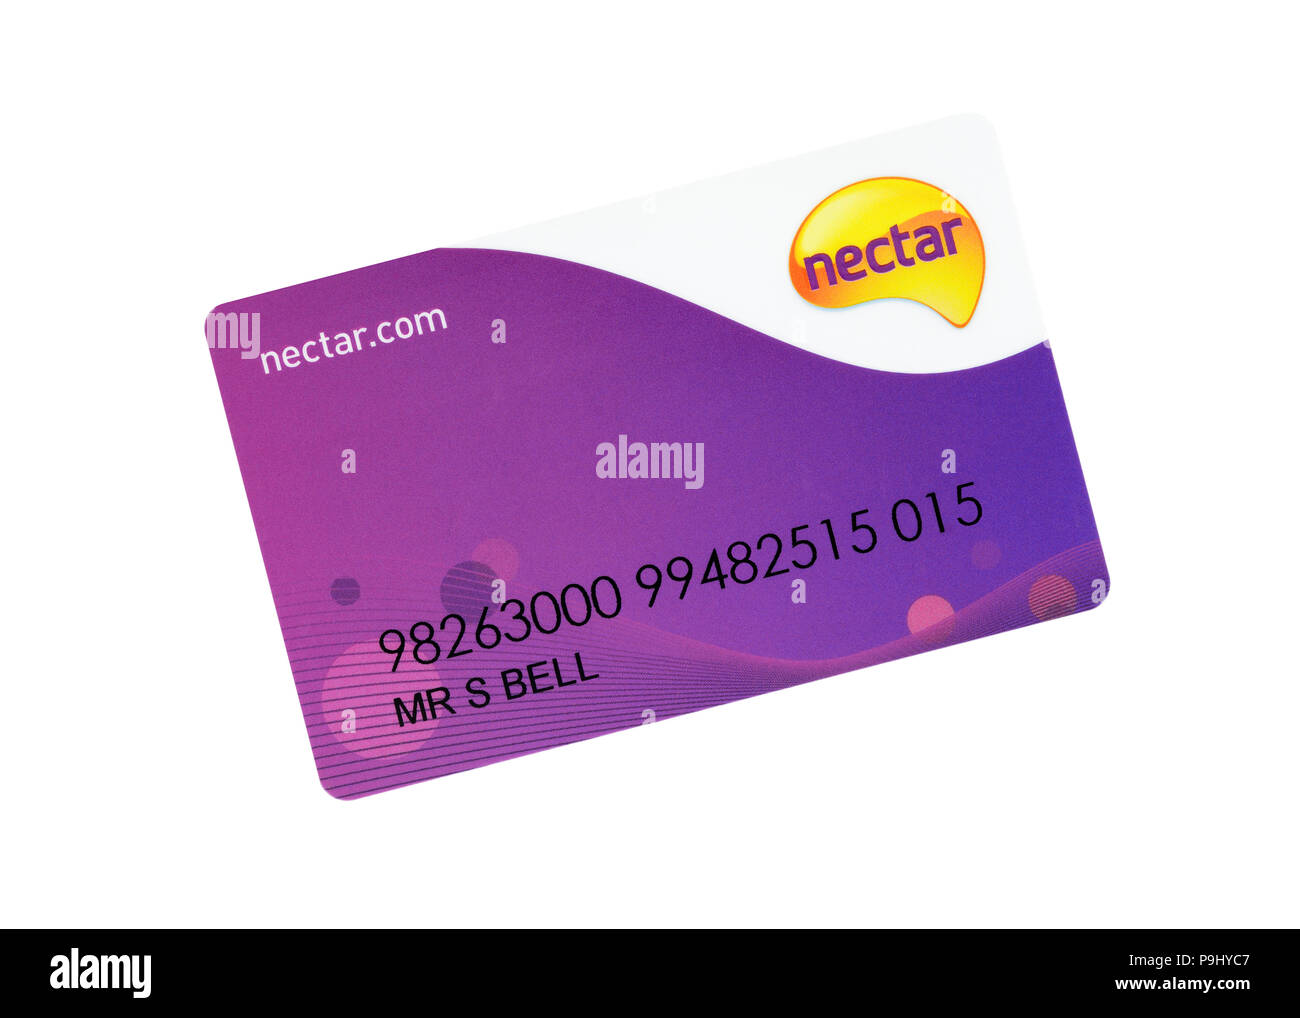 Nectar Card Stock Photo